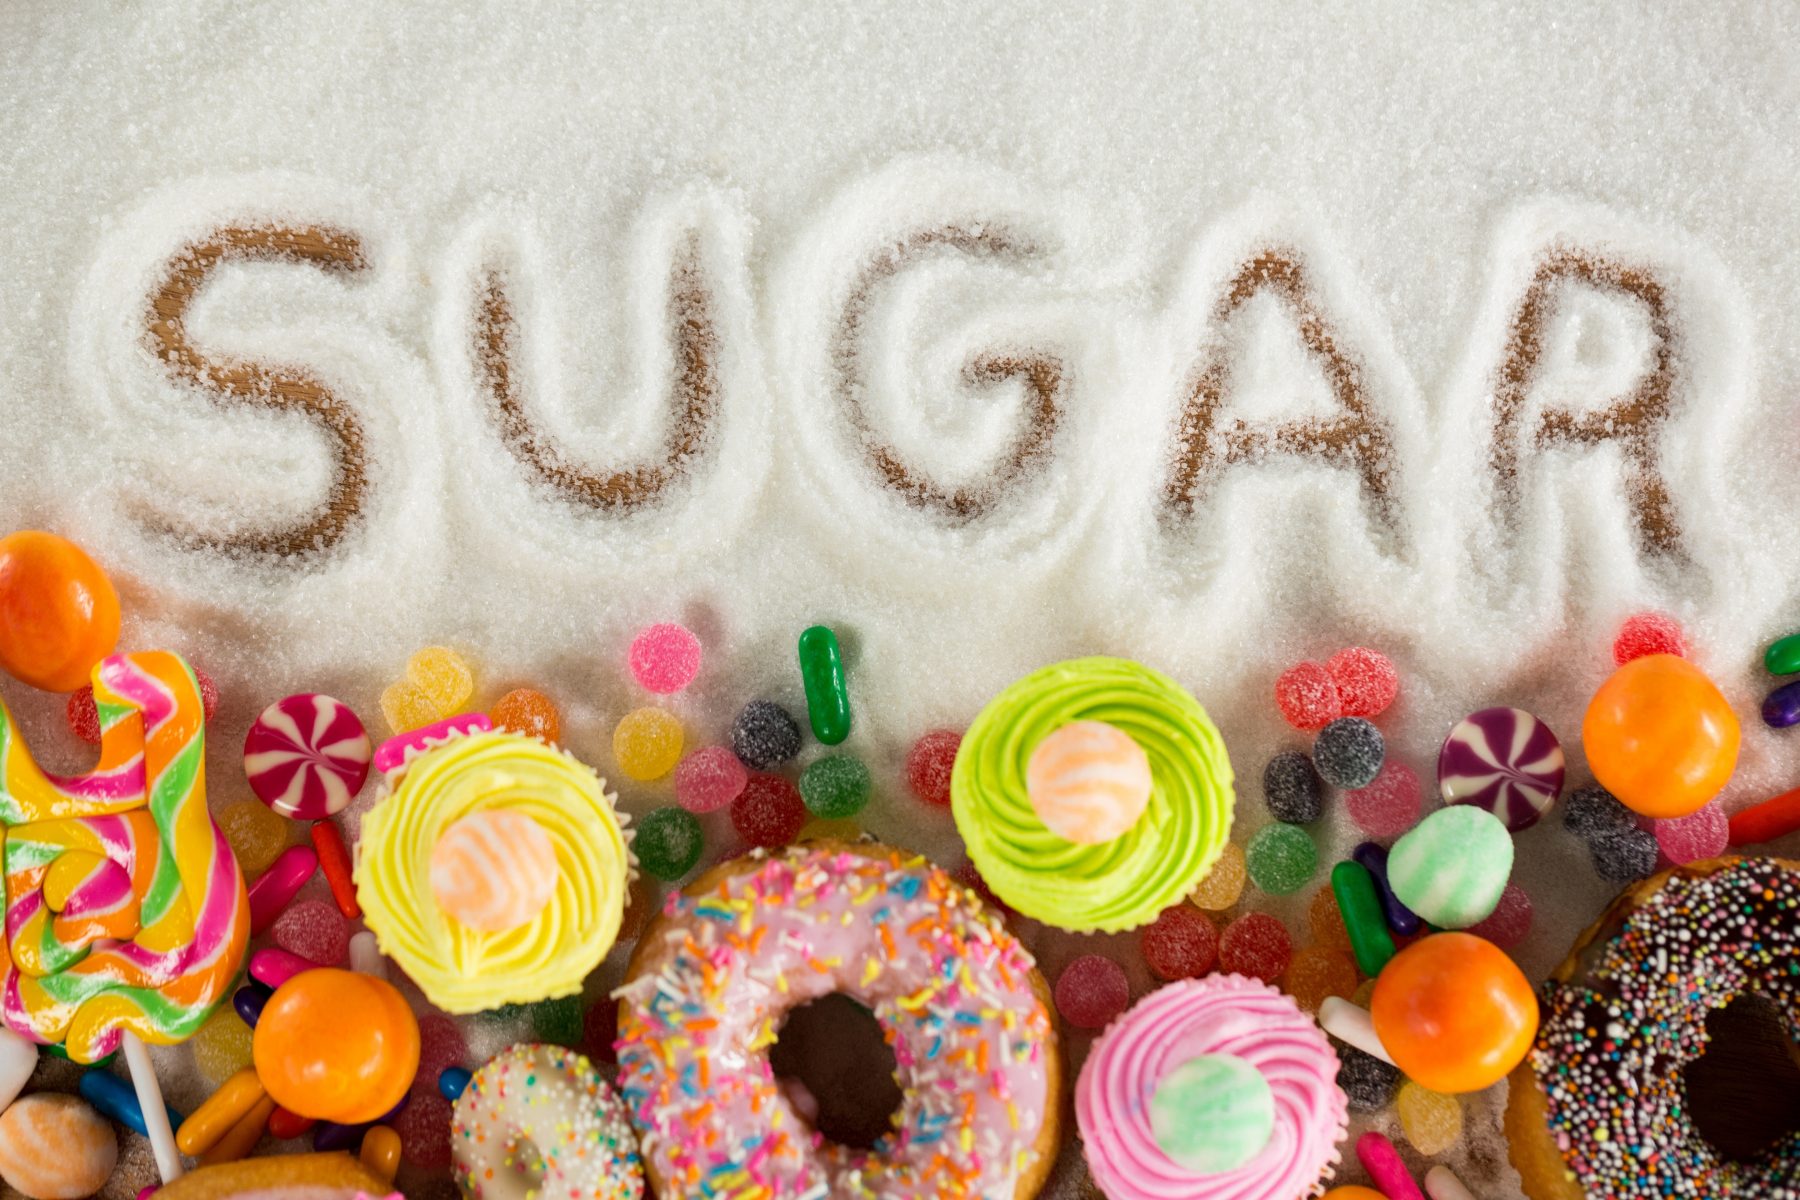 Sugar and health